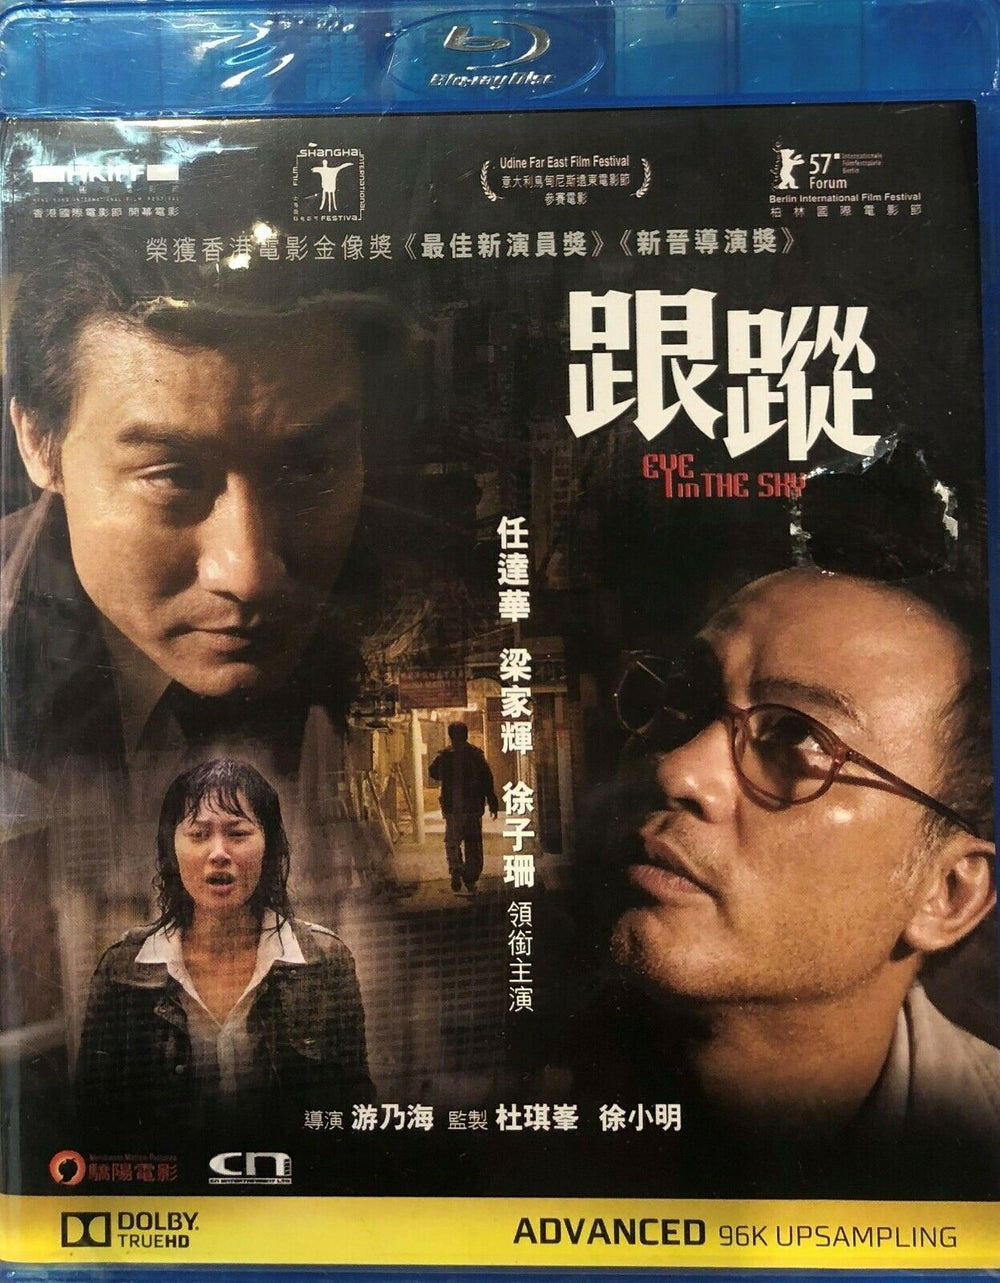 Eye in The Sky 跟蹤 2007 (Hong Kong Movie) BLU-RAY with English Sub (Region A)